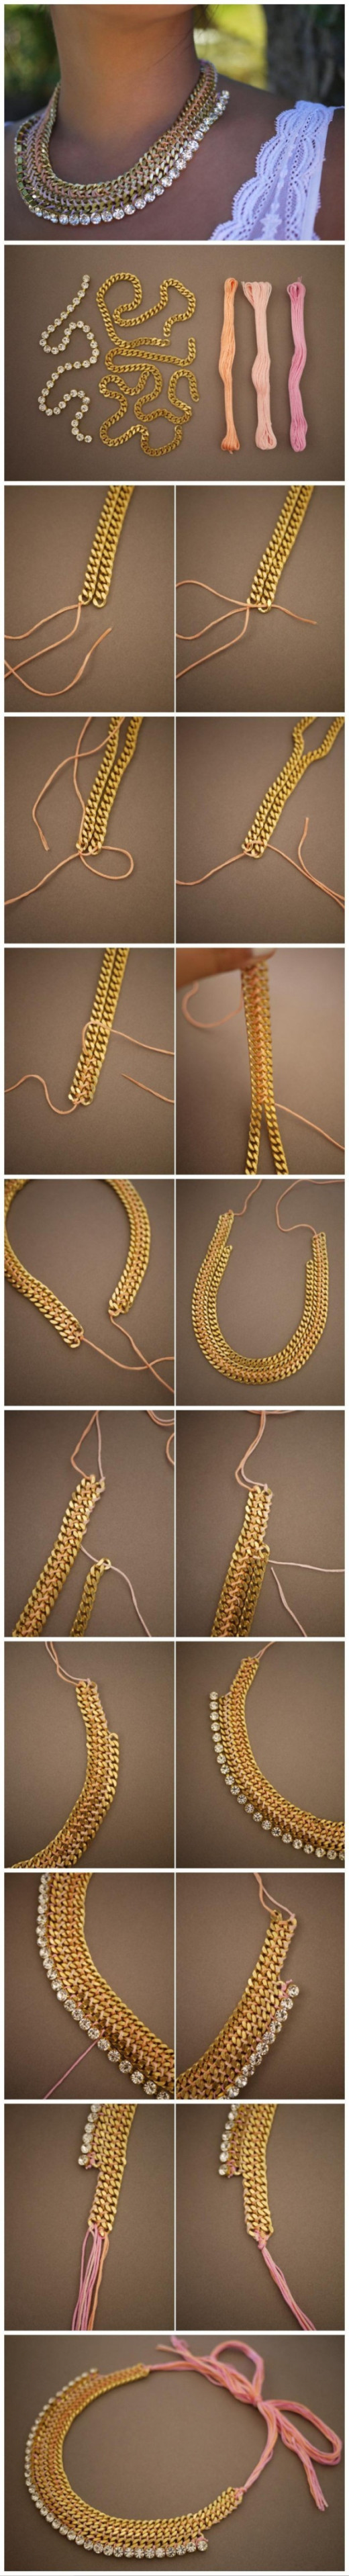 DIY Woven Chain Collar Necklace